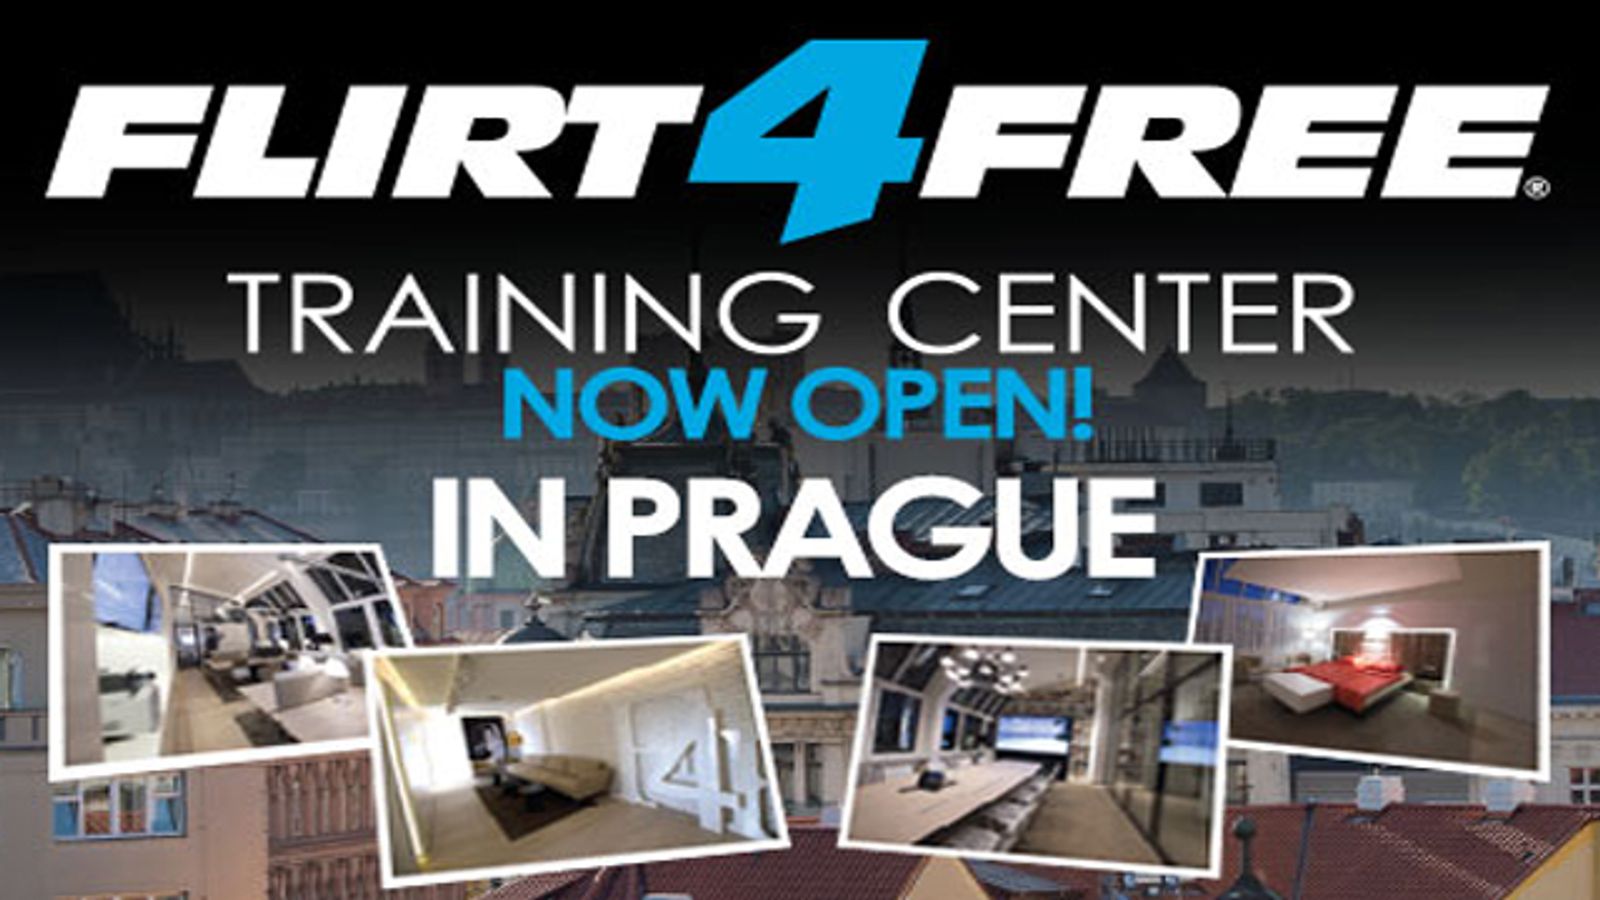 Flirt4free Opens Company's First European Training Center